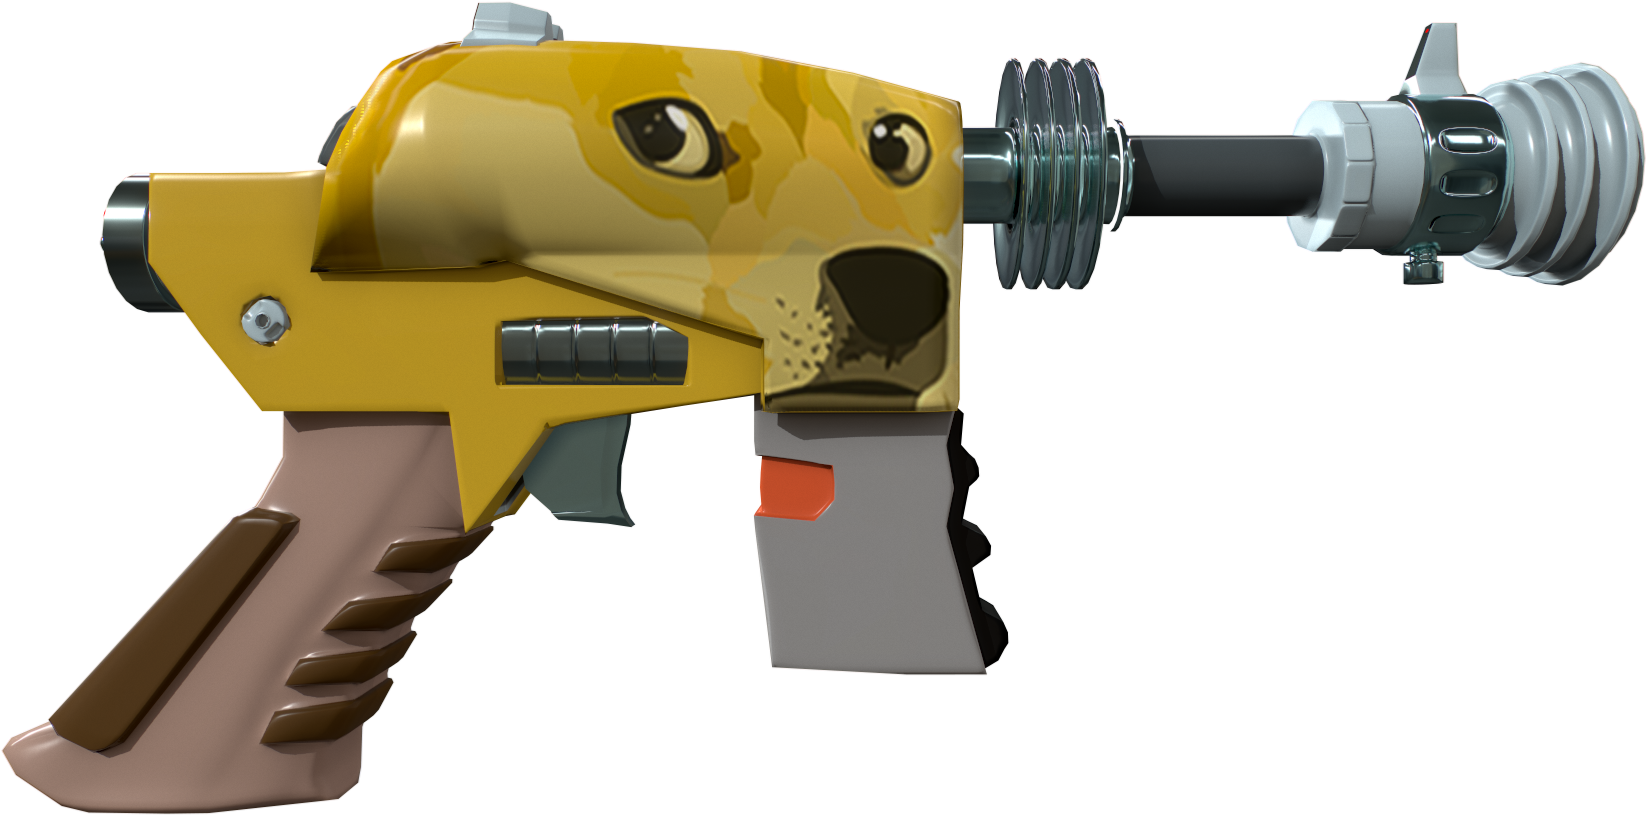 A Toy Gun With A Dog Head